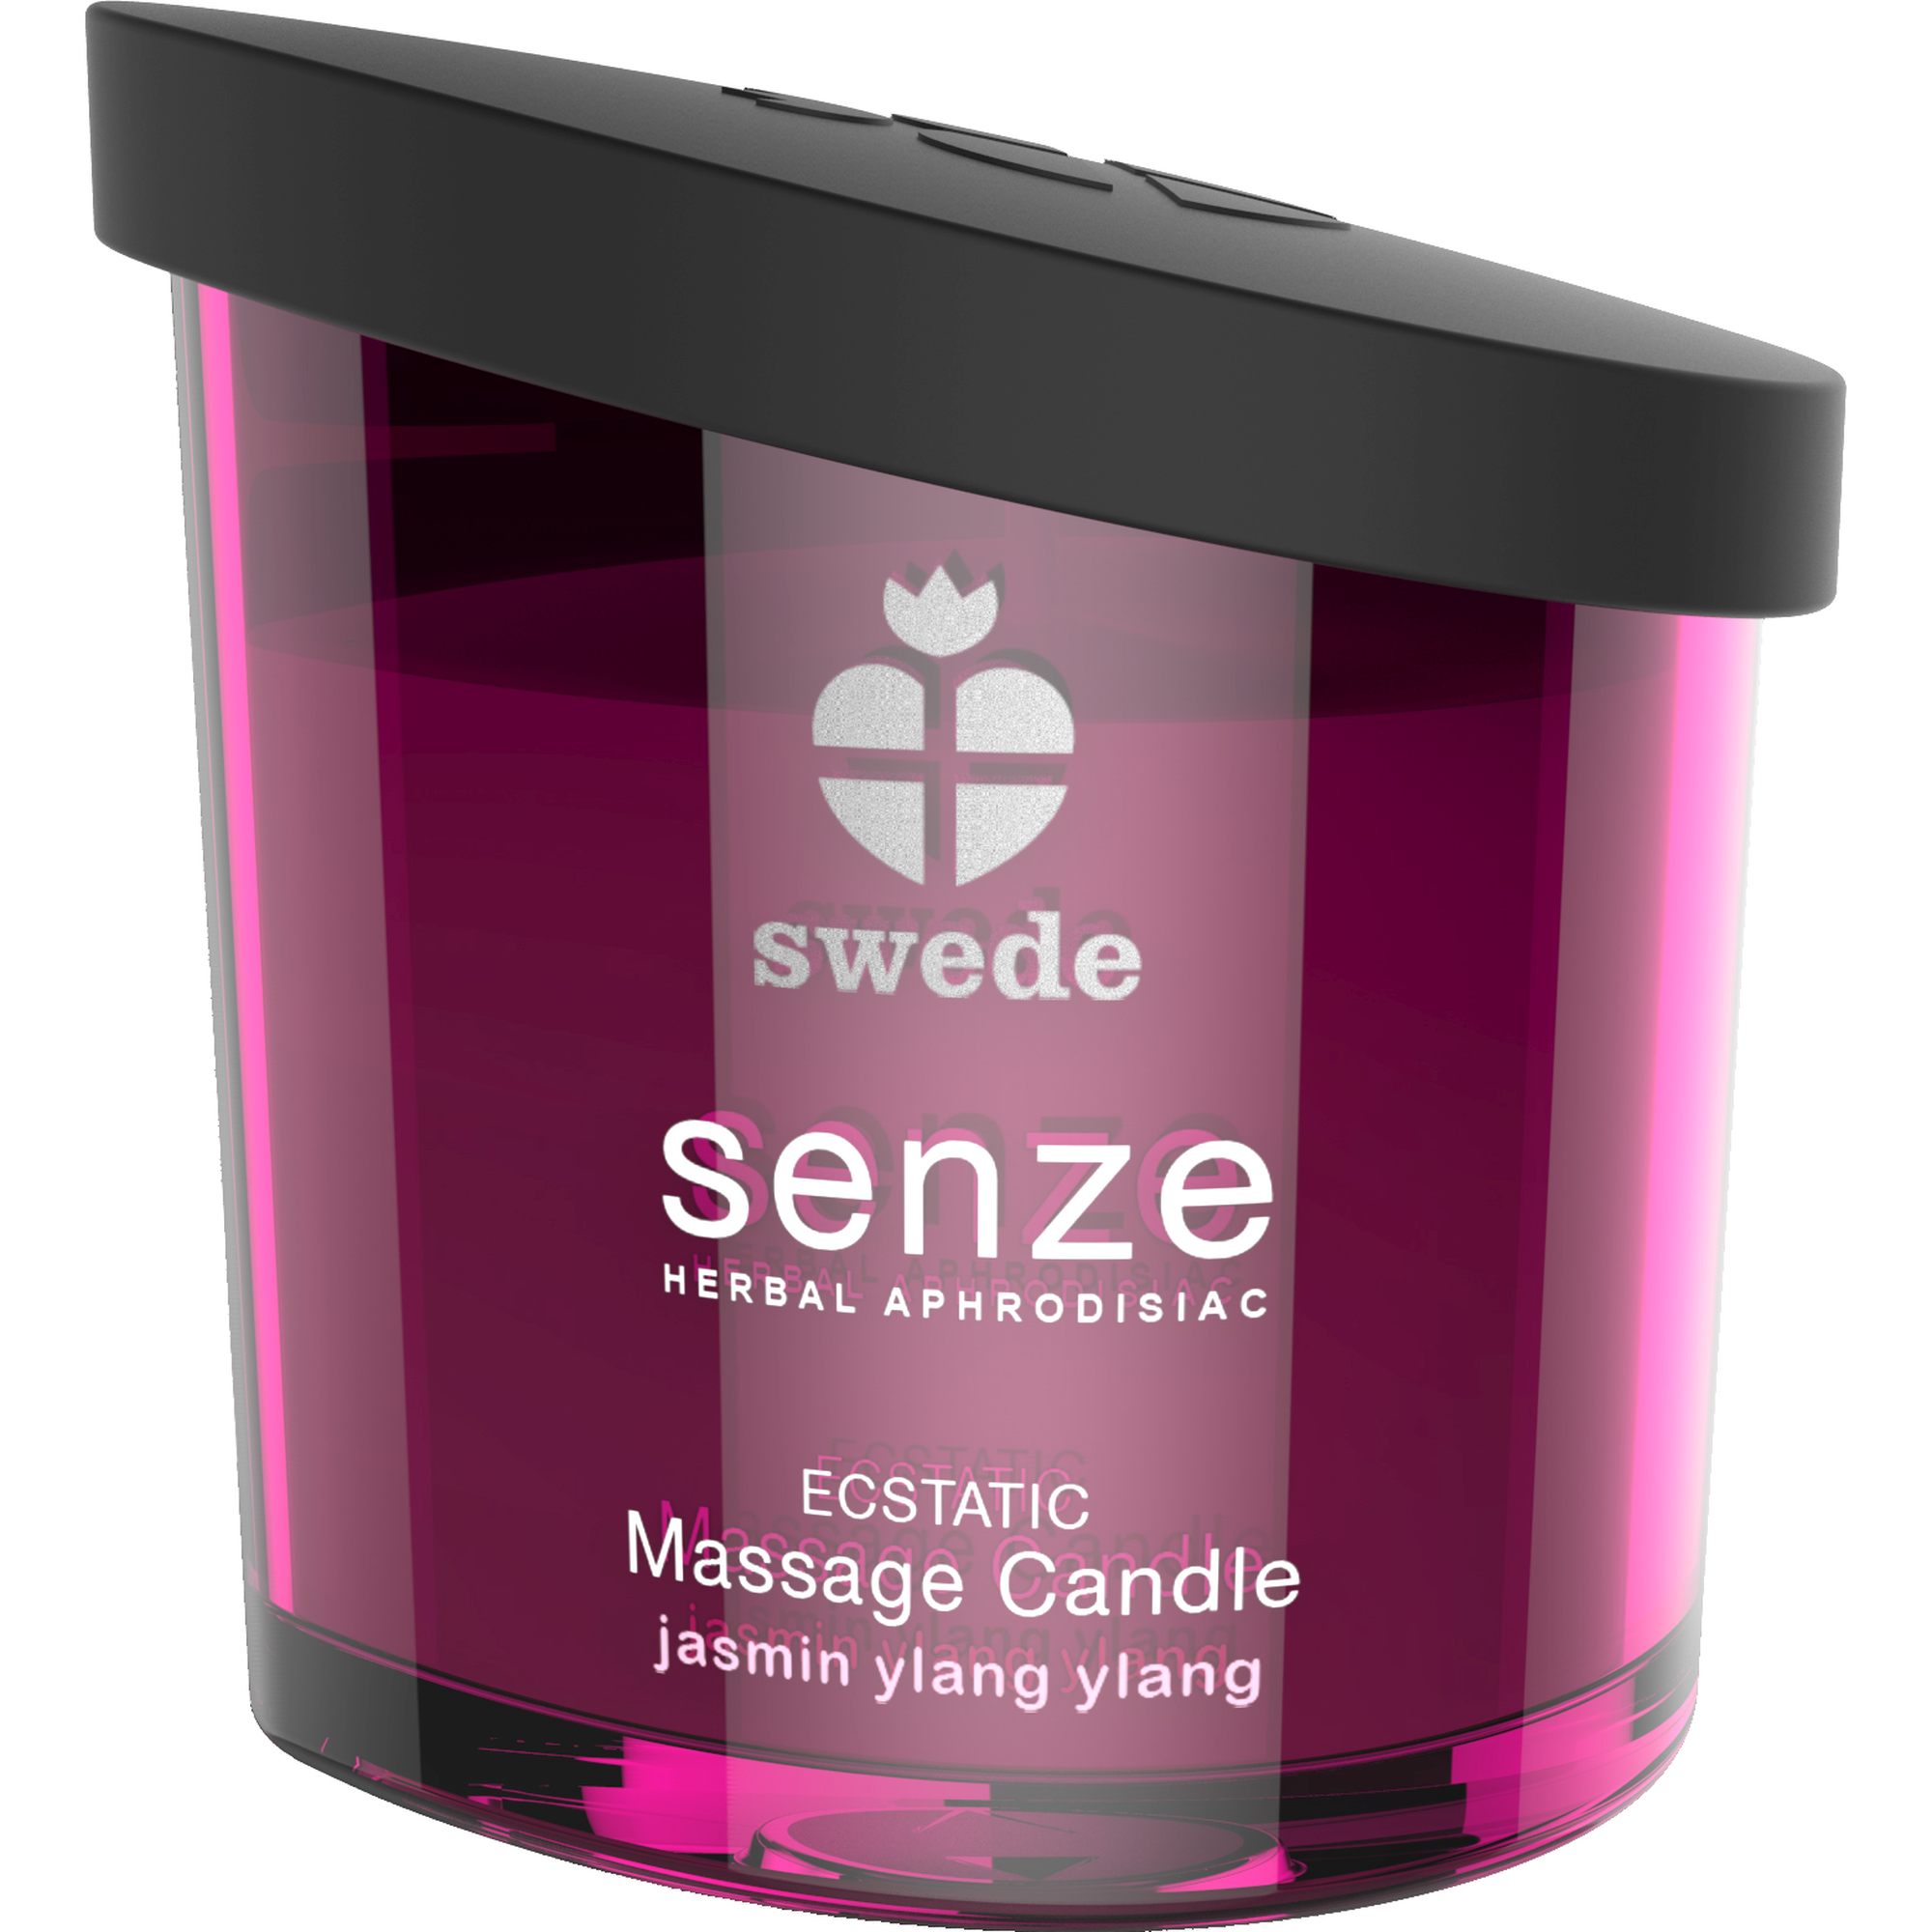 Swede – Senze Ecstatic Massage Candle Jasmine Ylang Ylang 